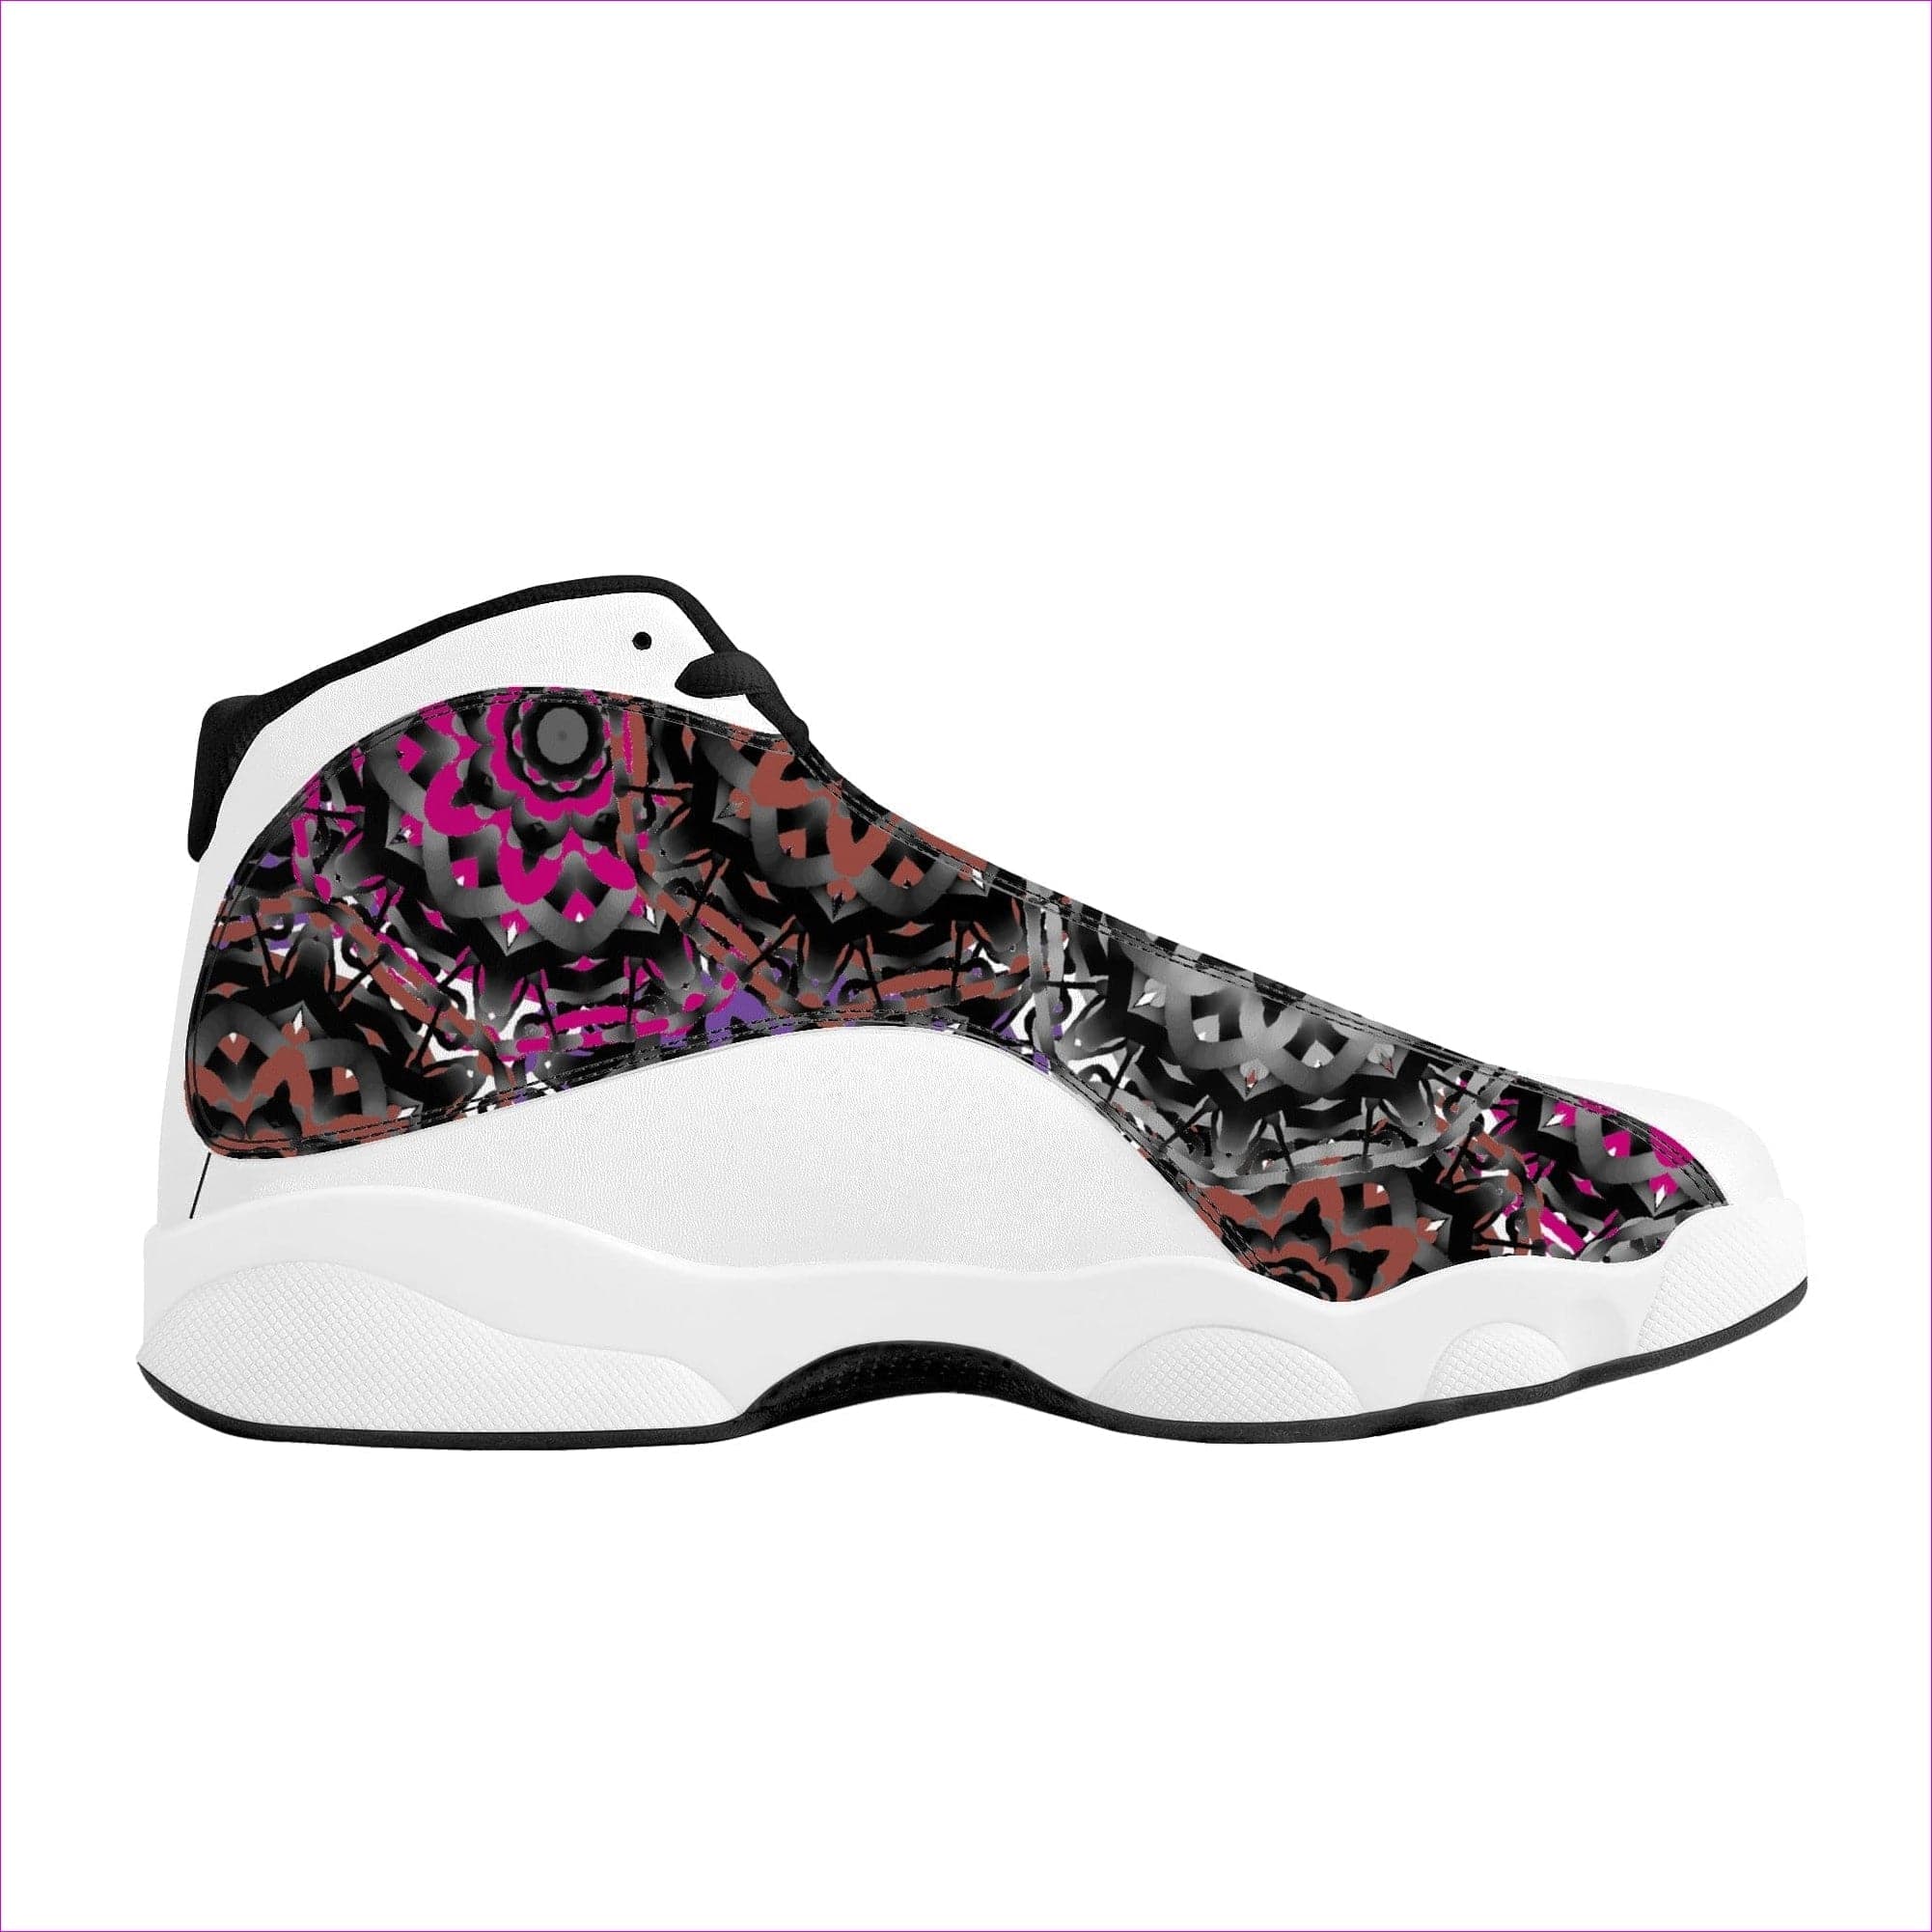 - Mandala Graffiti Basketball Shoes - unisex basketball shoes at TFC&H Co.